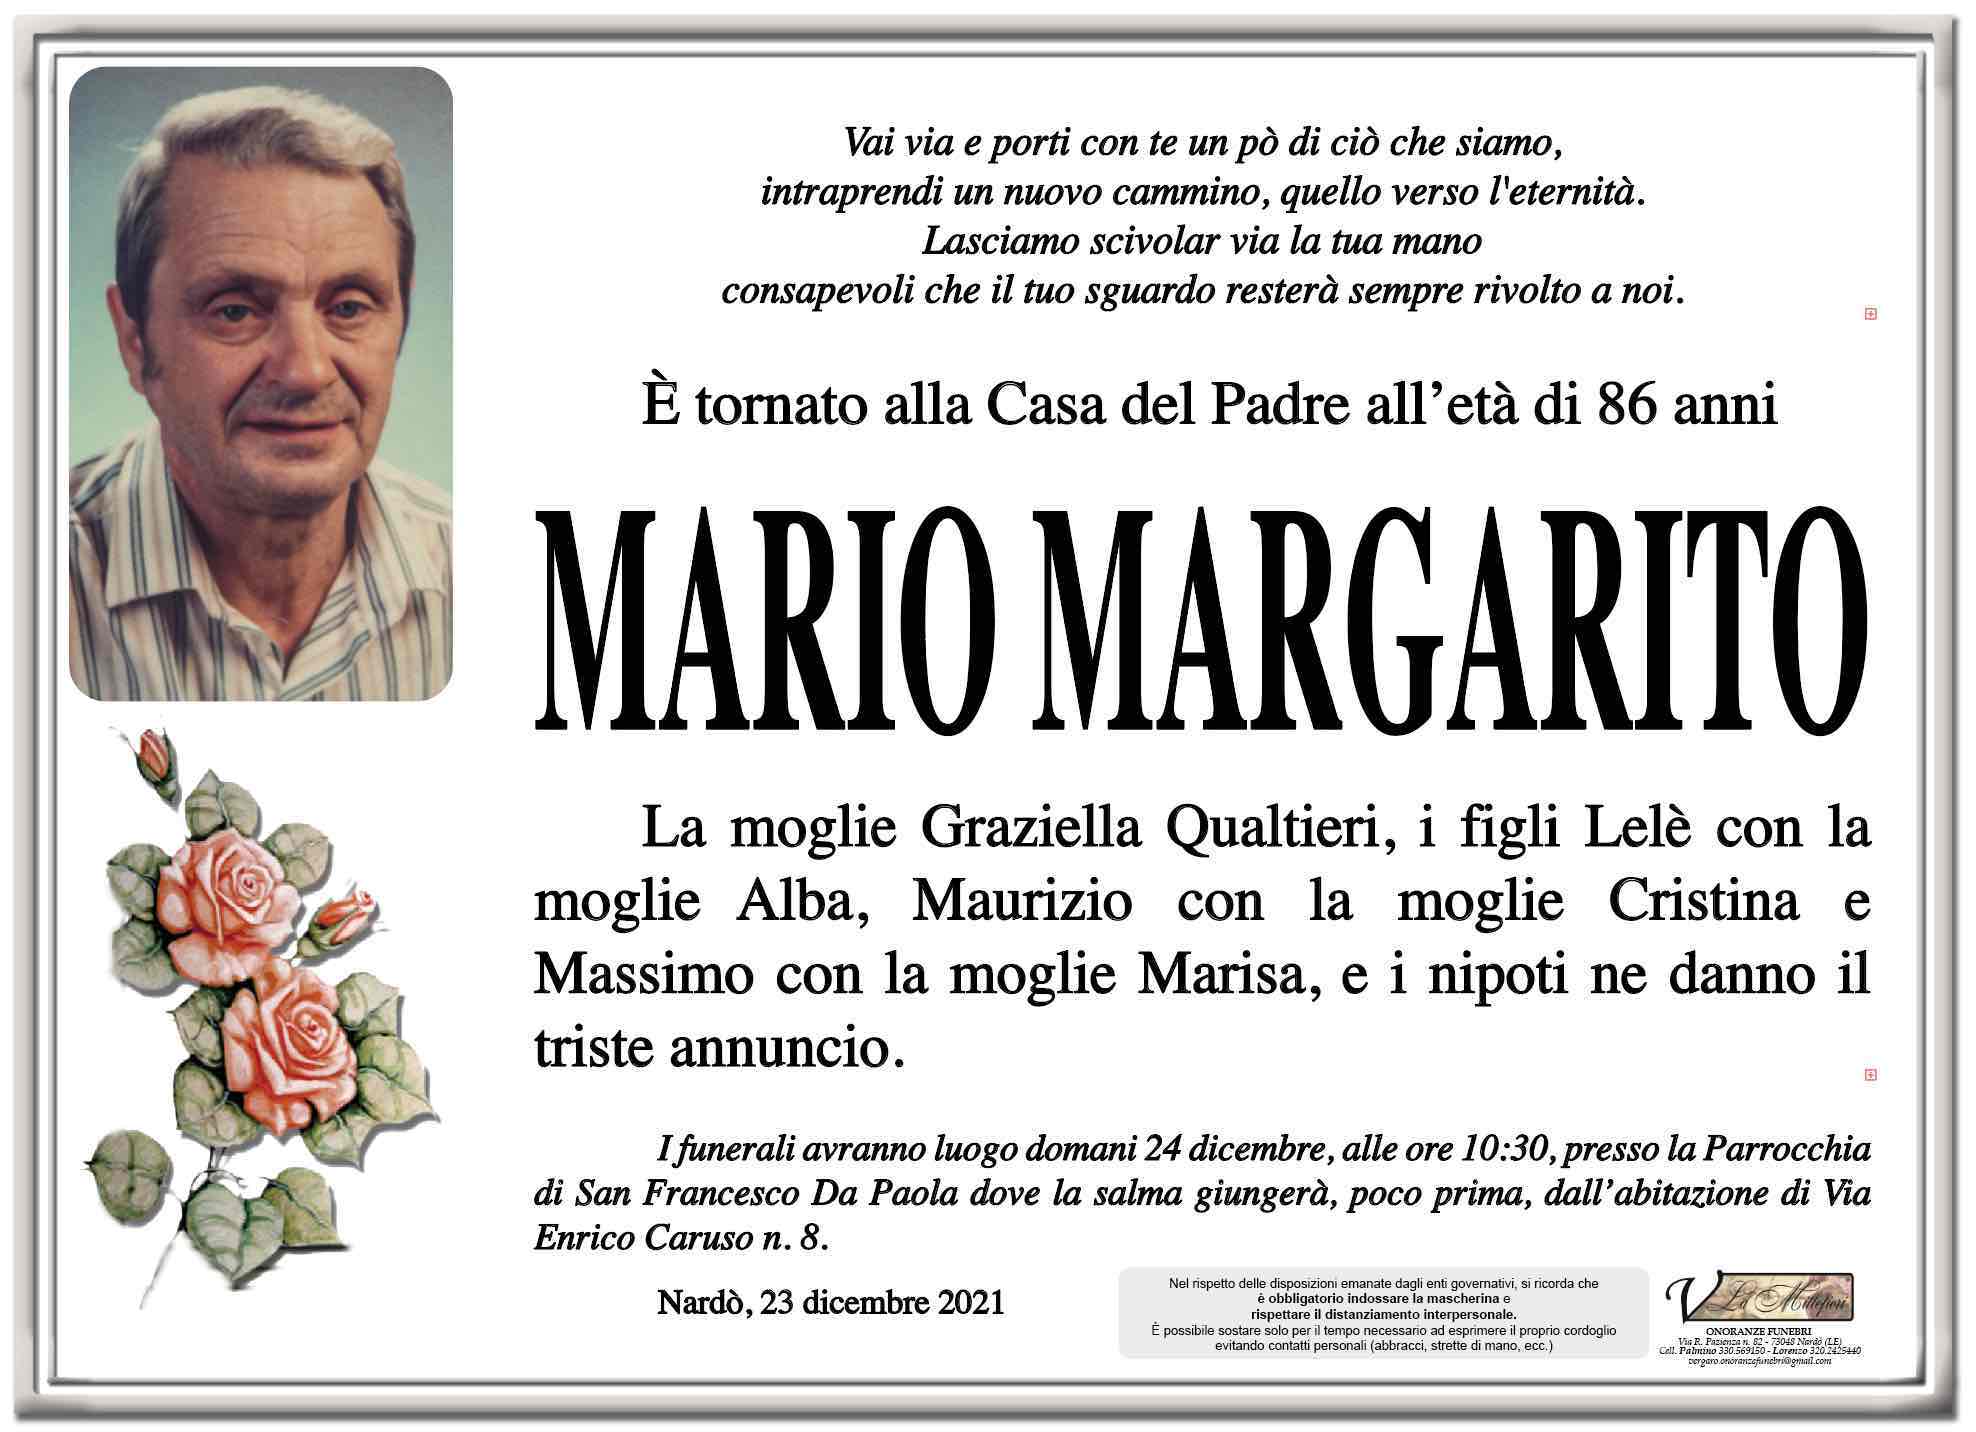 Mario Margarito